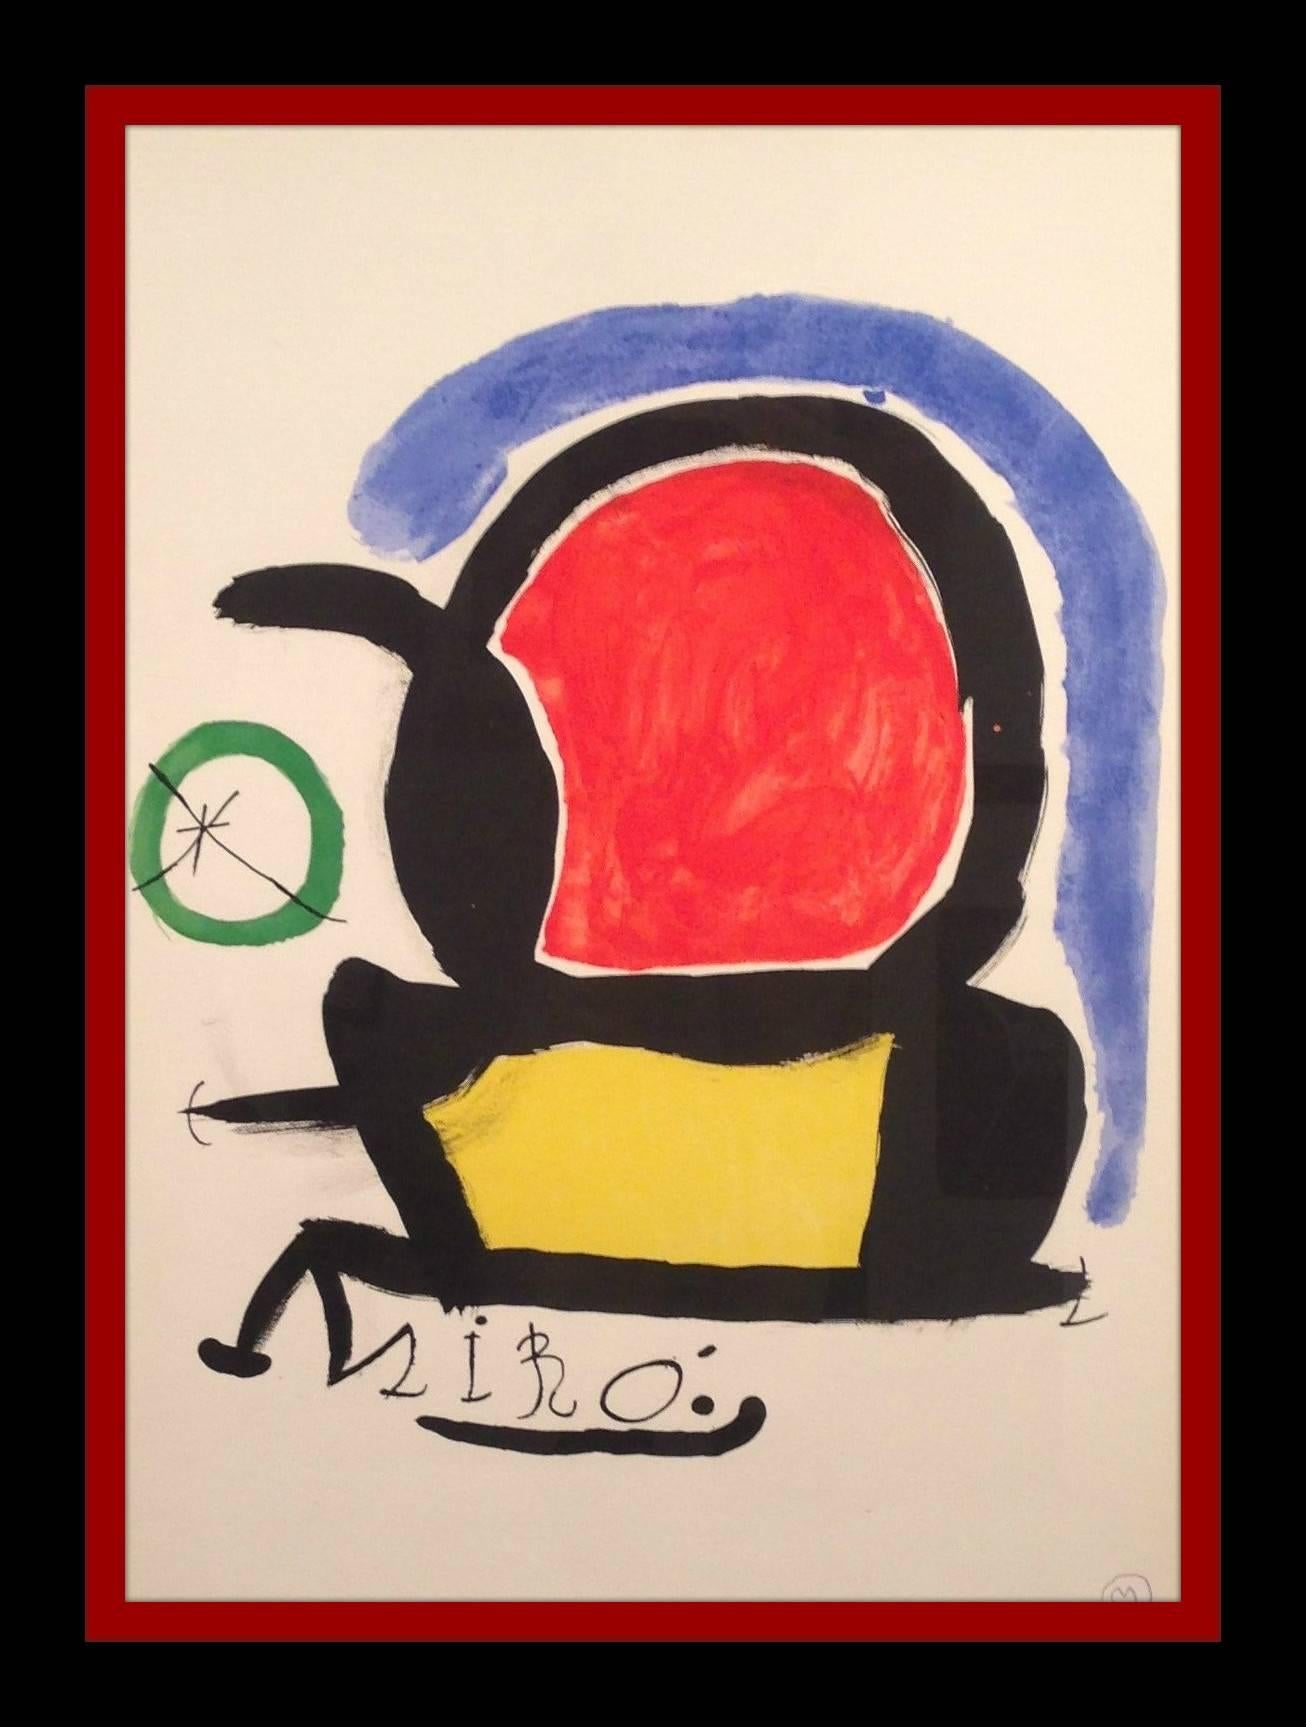 Miro . vertical. black. red. yellow.  TAPIZ DE TARRAGONA - Print by Joan Miró